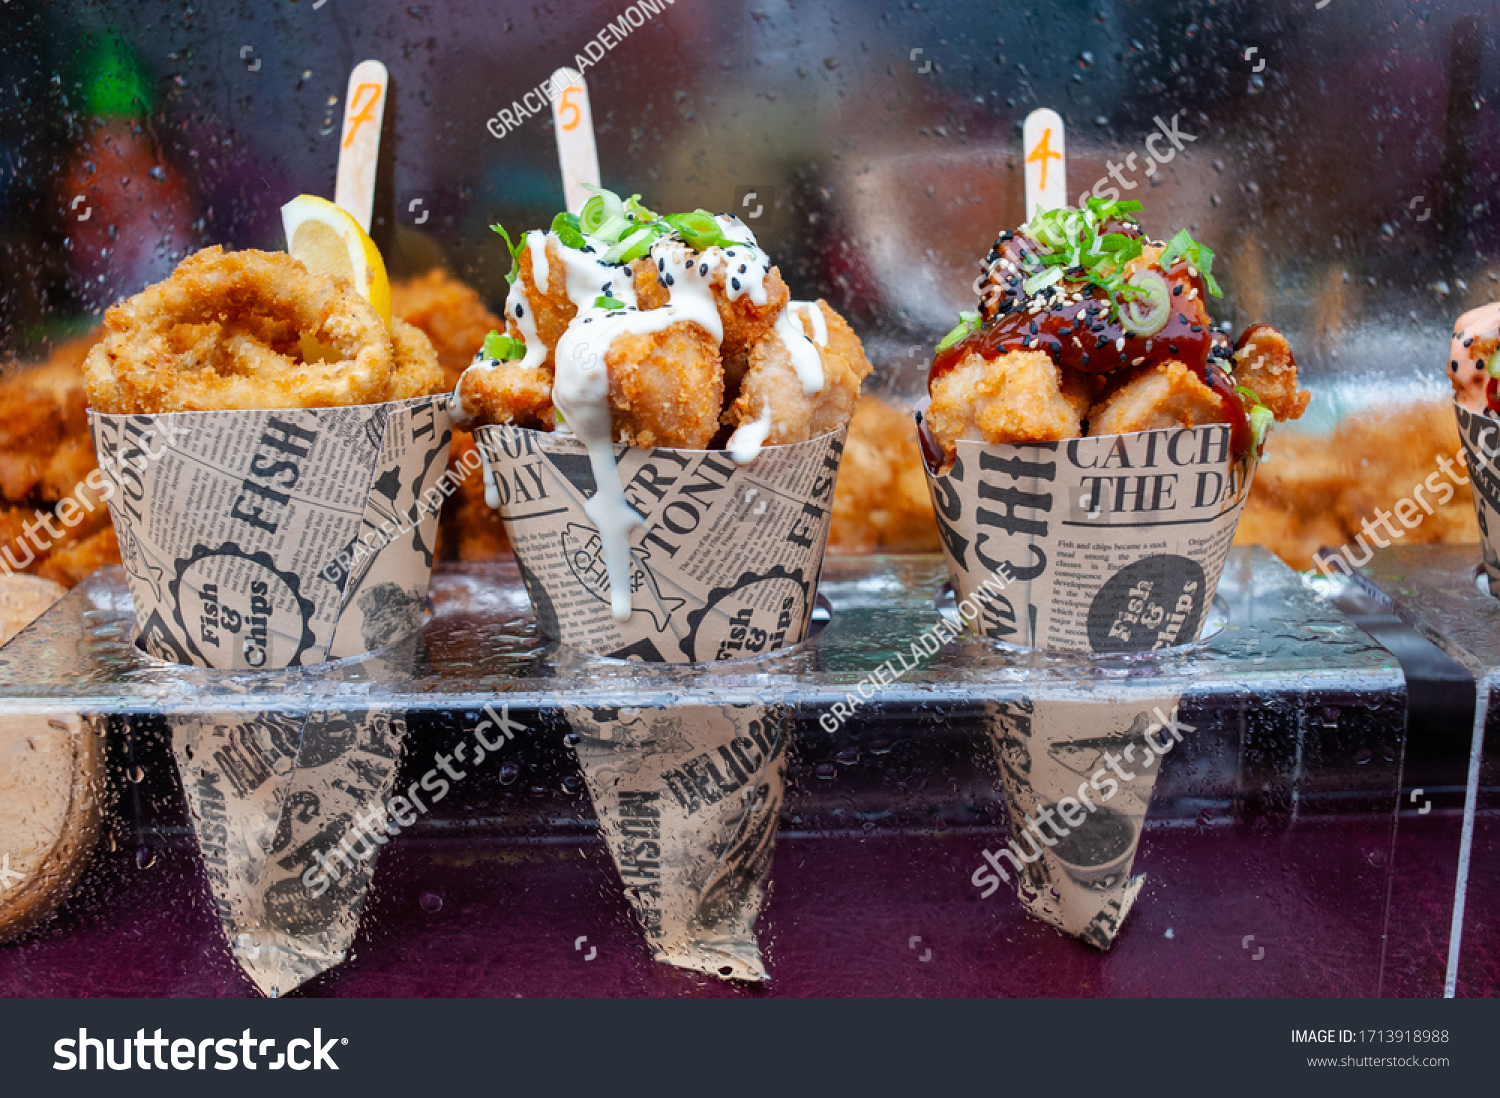 13,794 London street food Images, Stock Photos  Vectors | Shutterstock